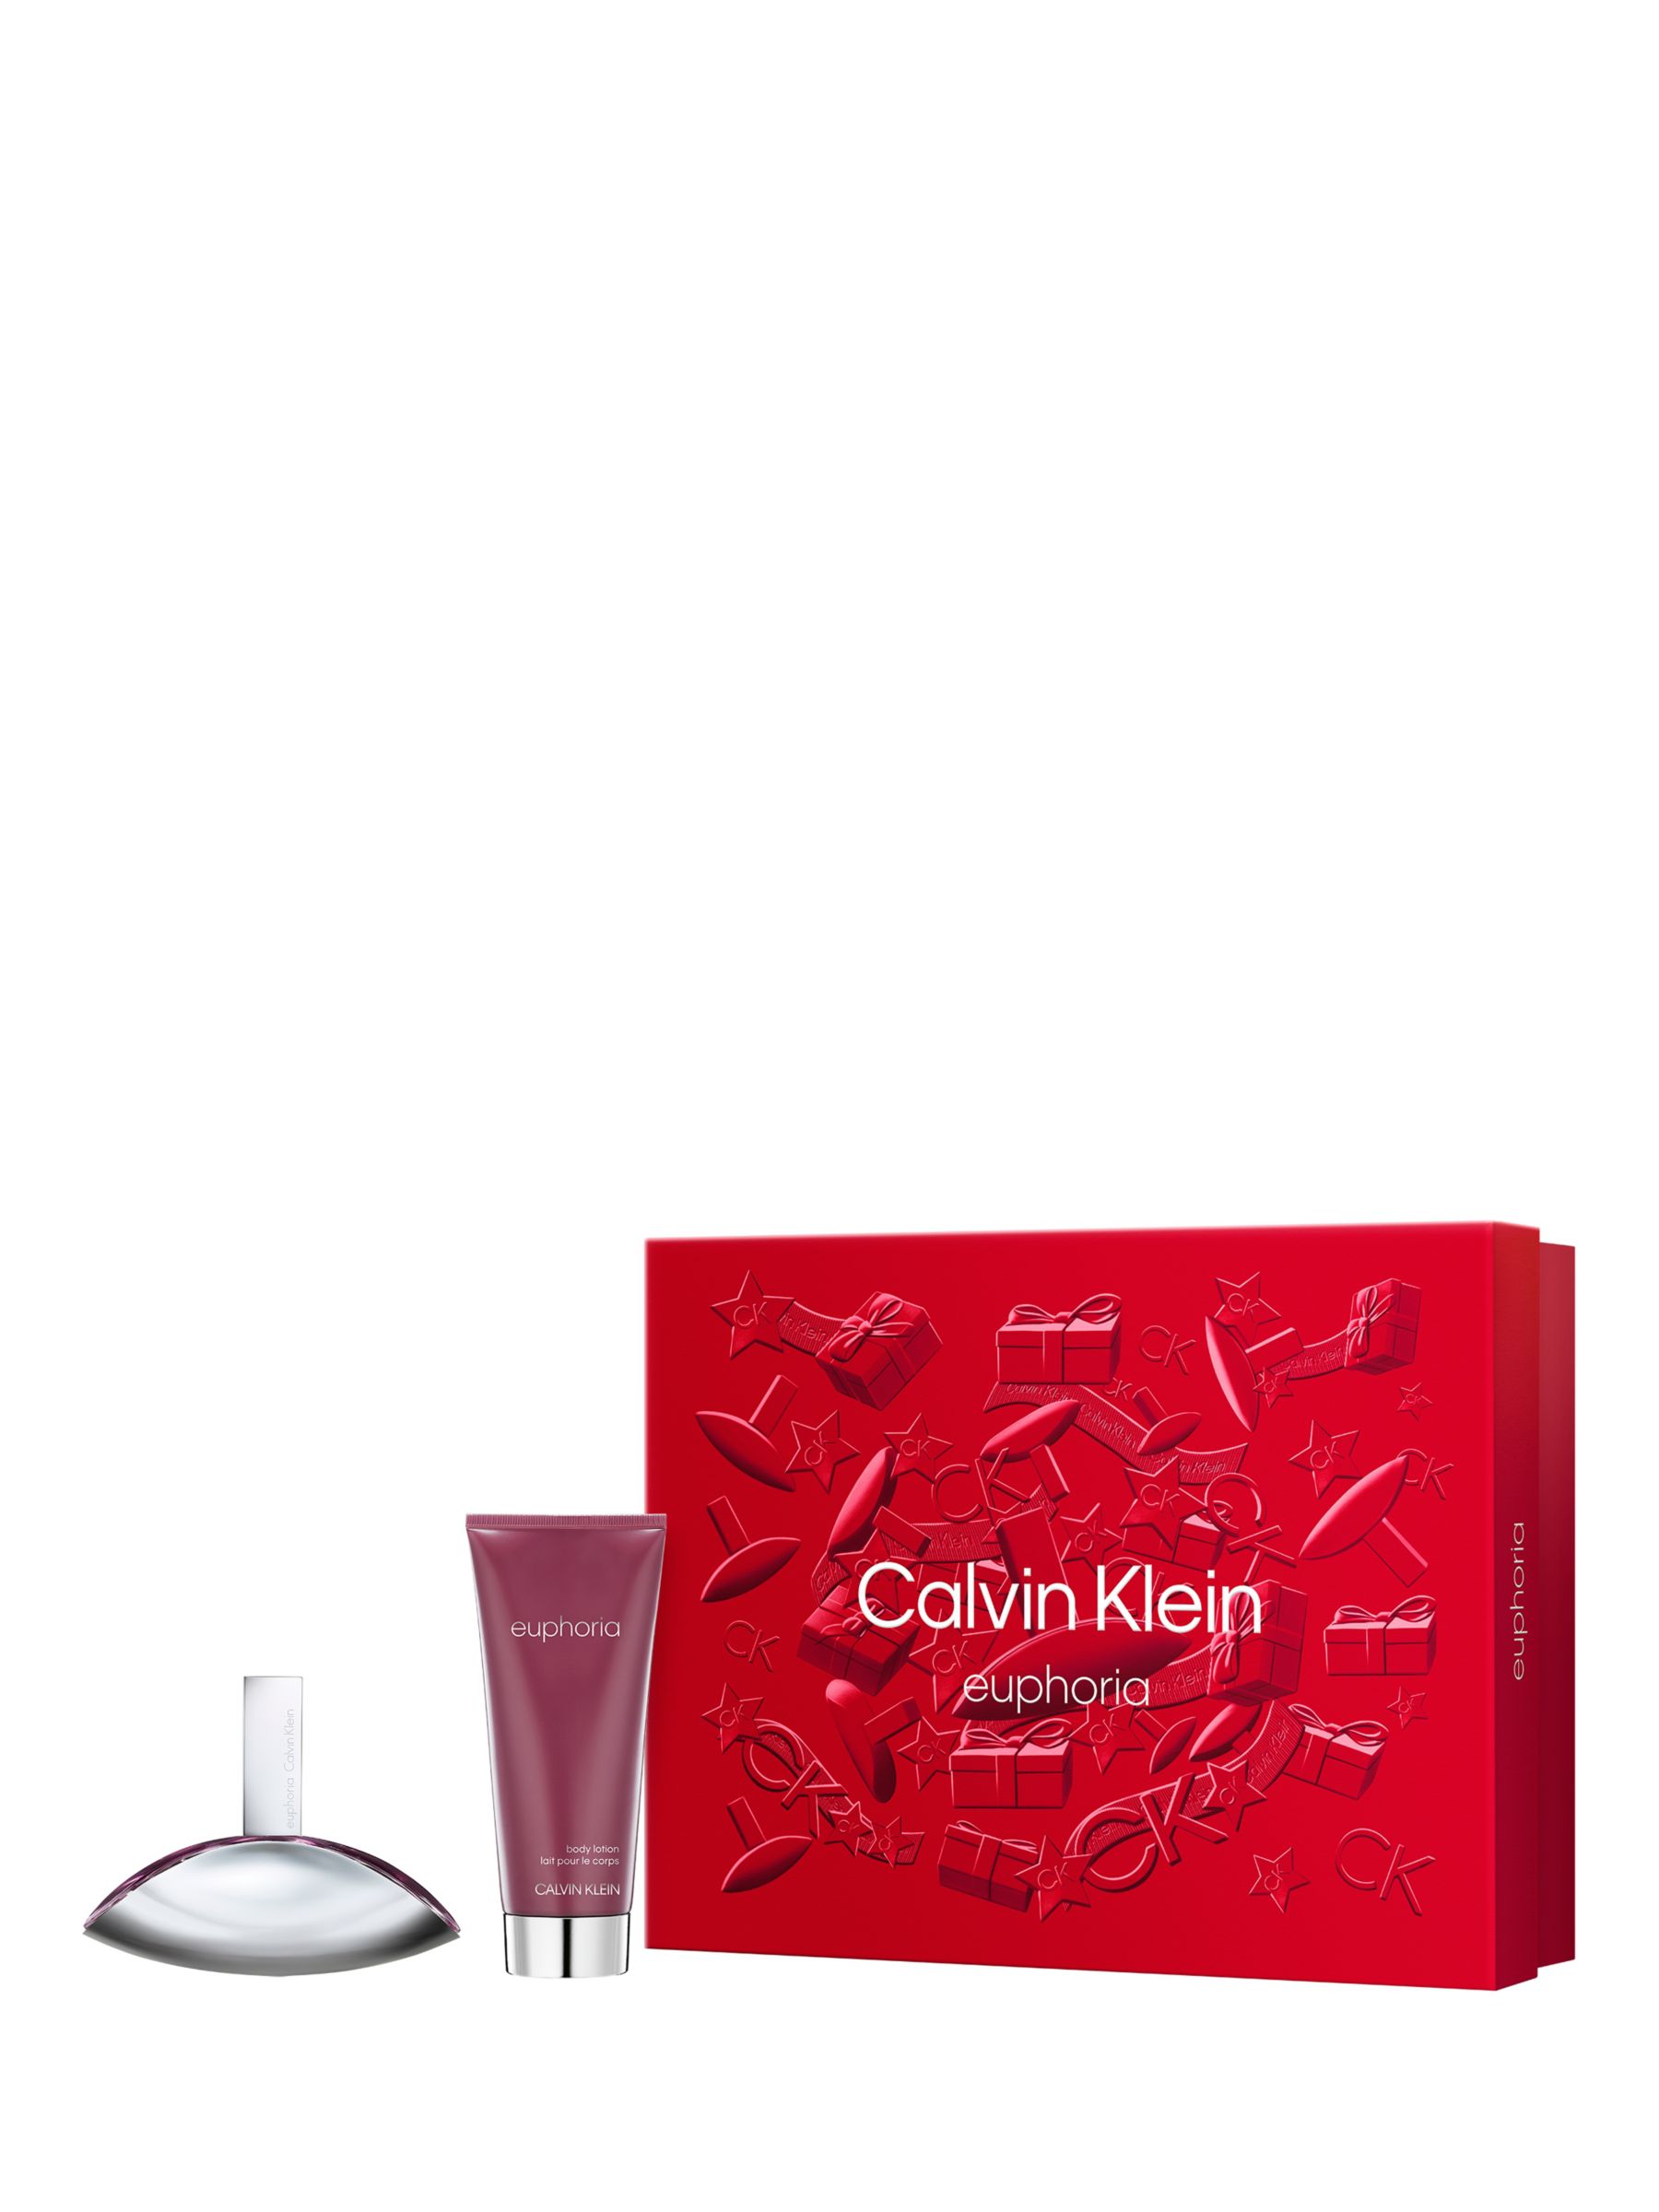 Calvin Klein Euphoria for Women Eau de Parfum 50ml Fragrance Gift Set